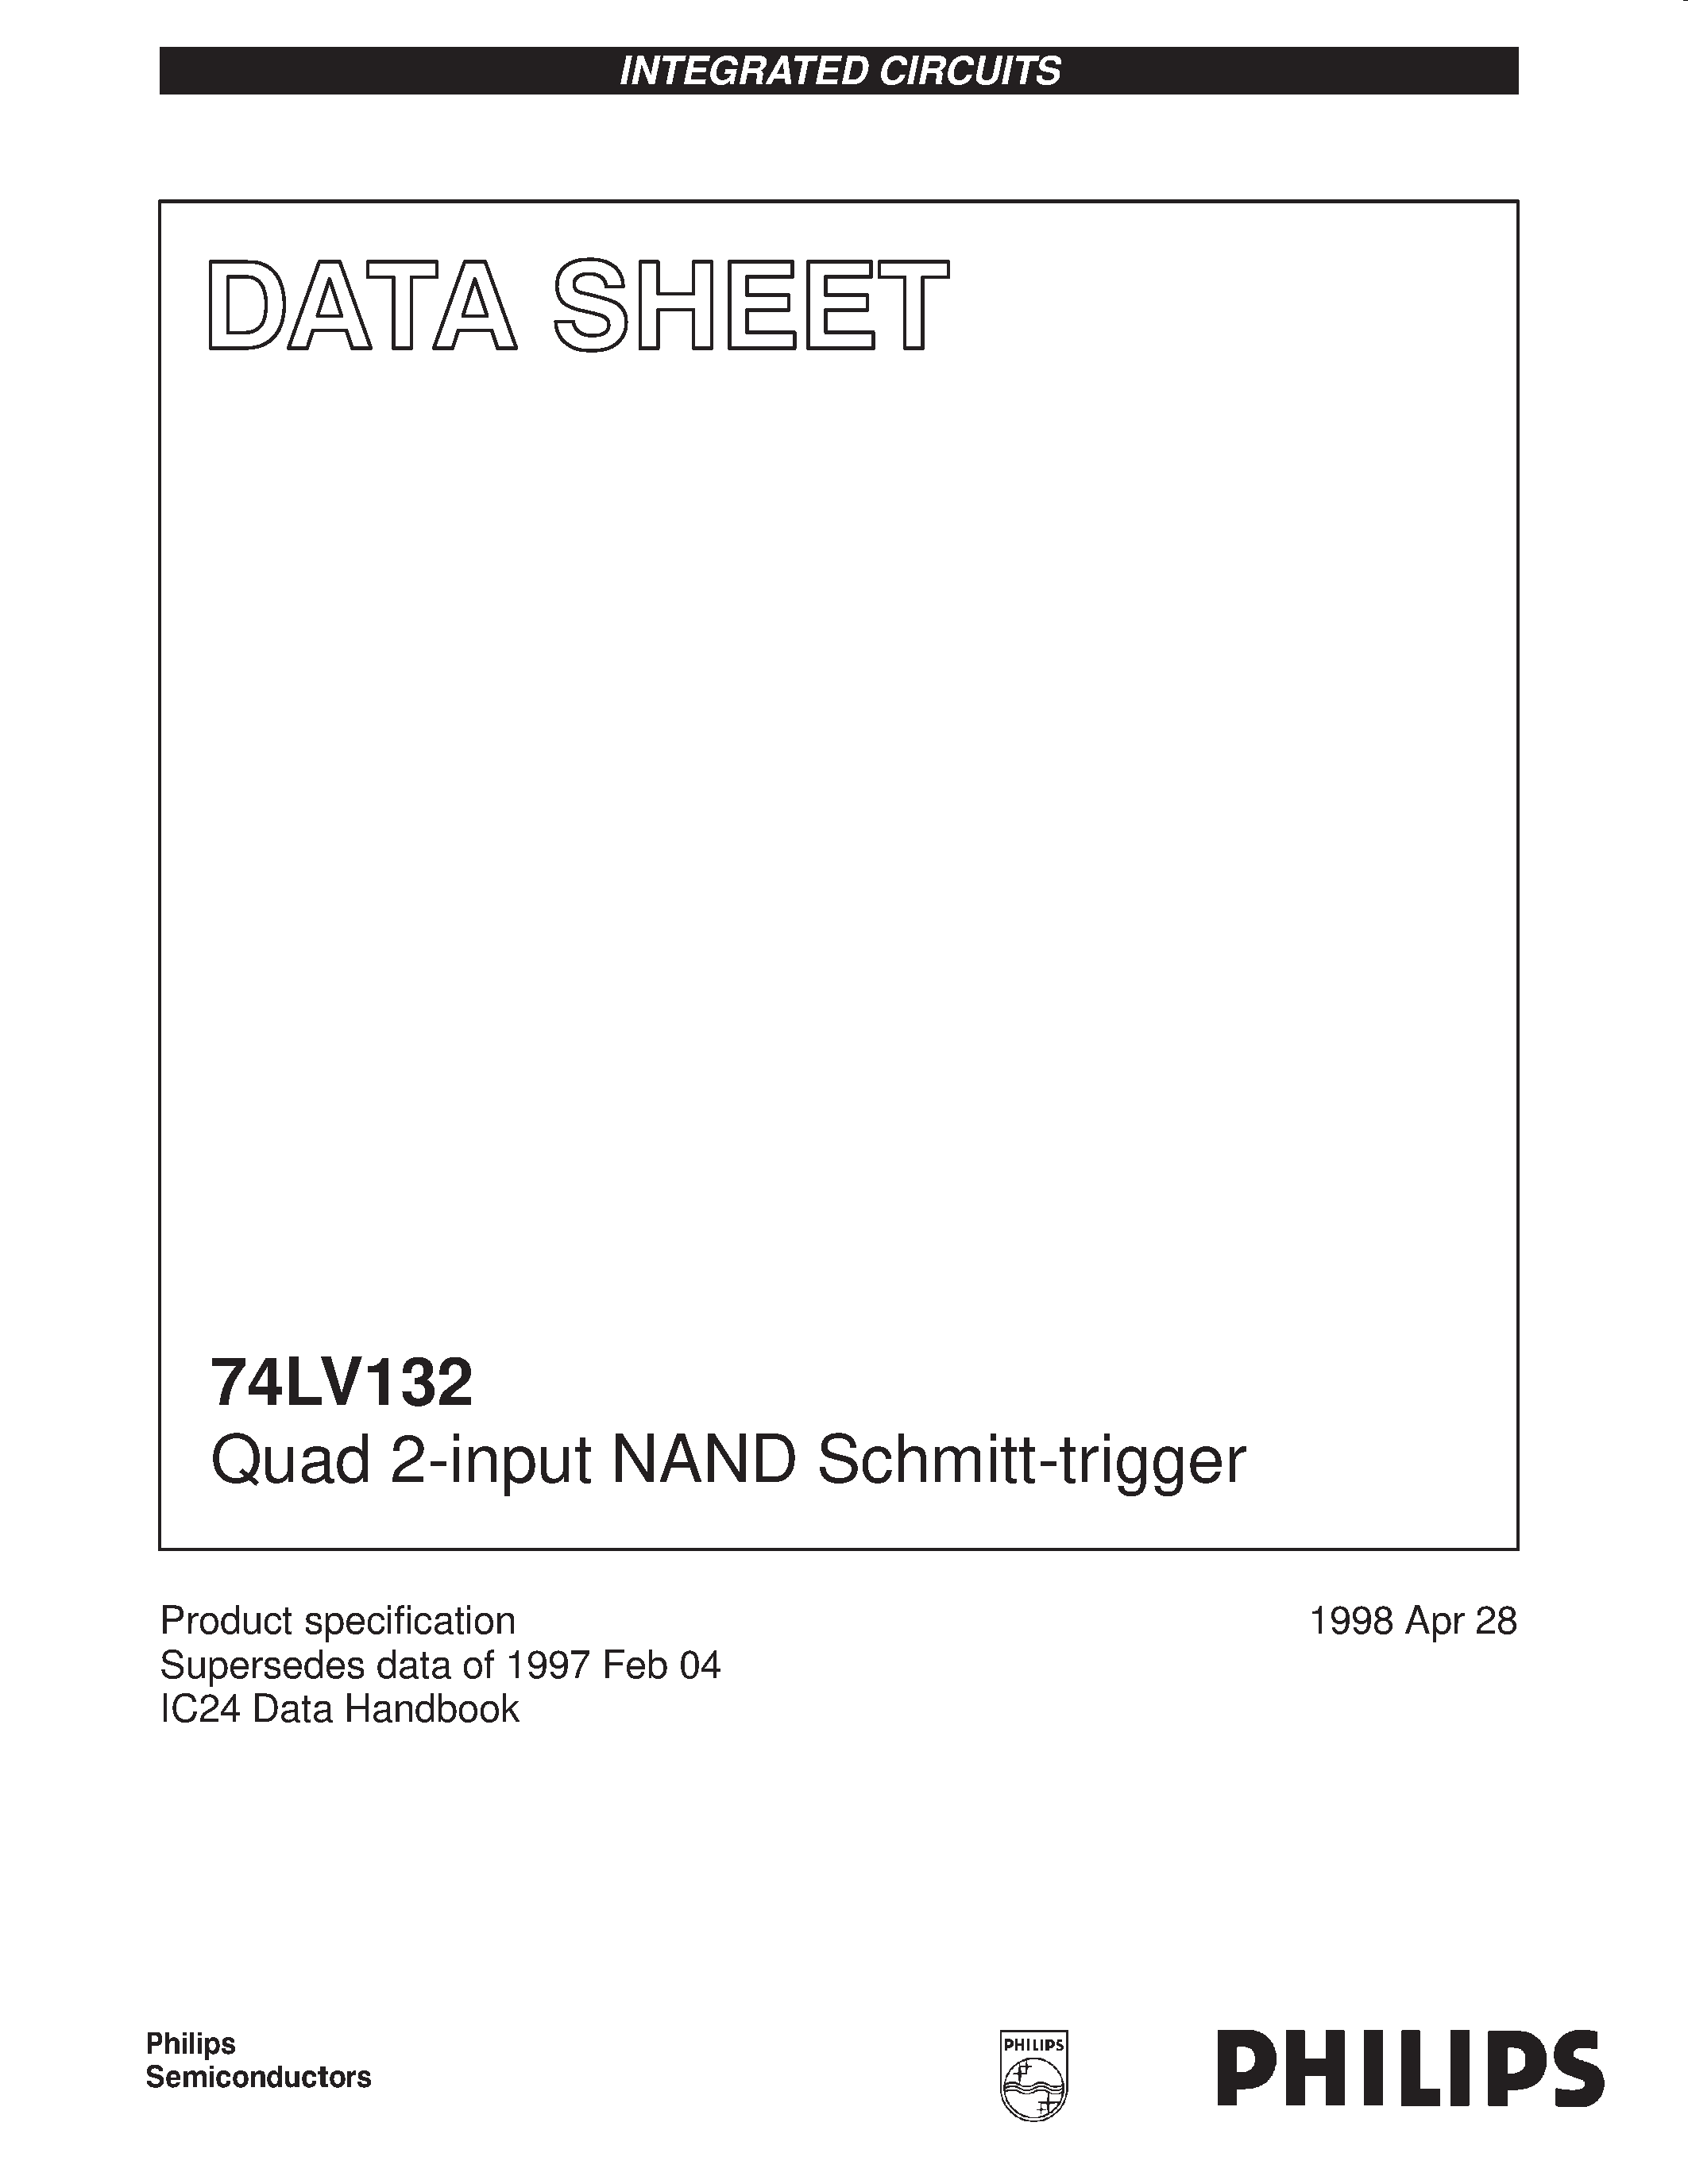 Даташит 74LV132 - Quad 2-input NAND Schmitt-trigger страница 1